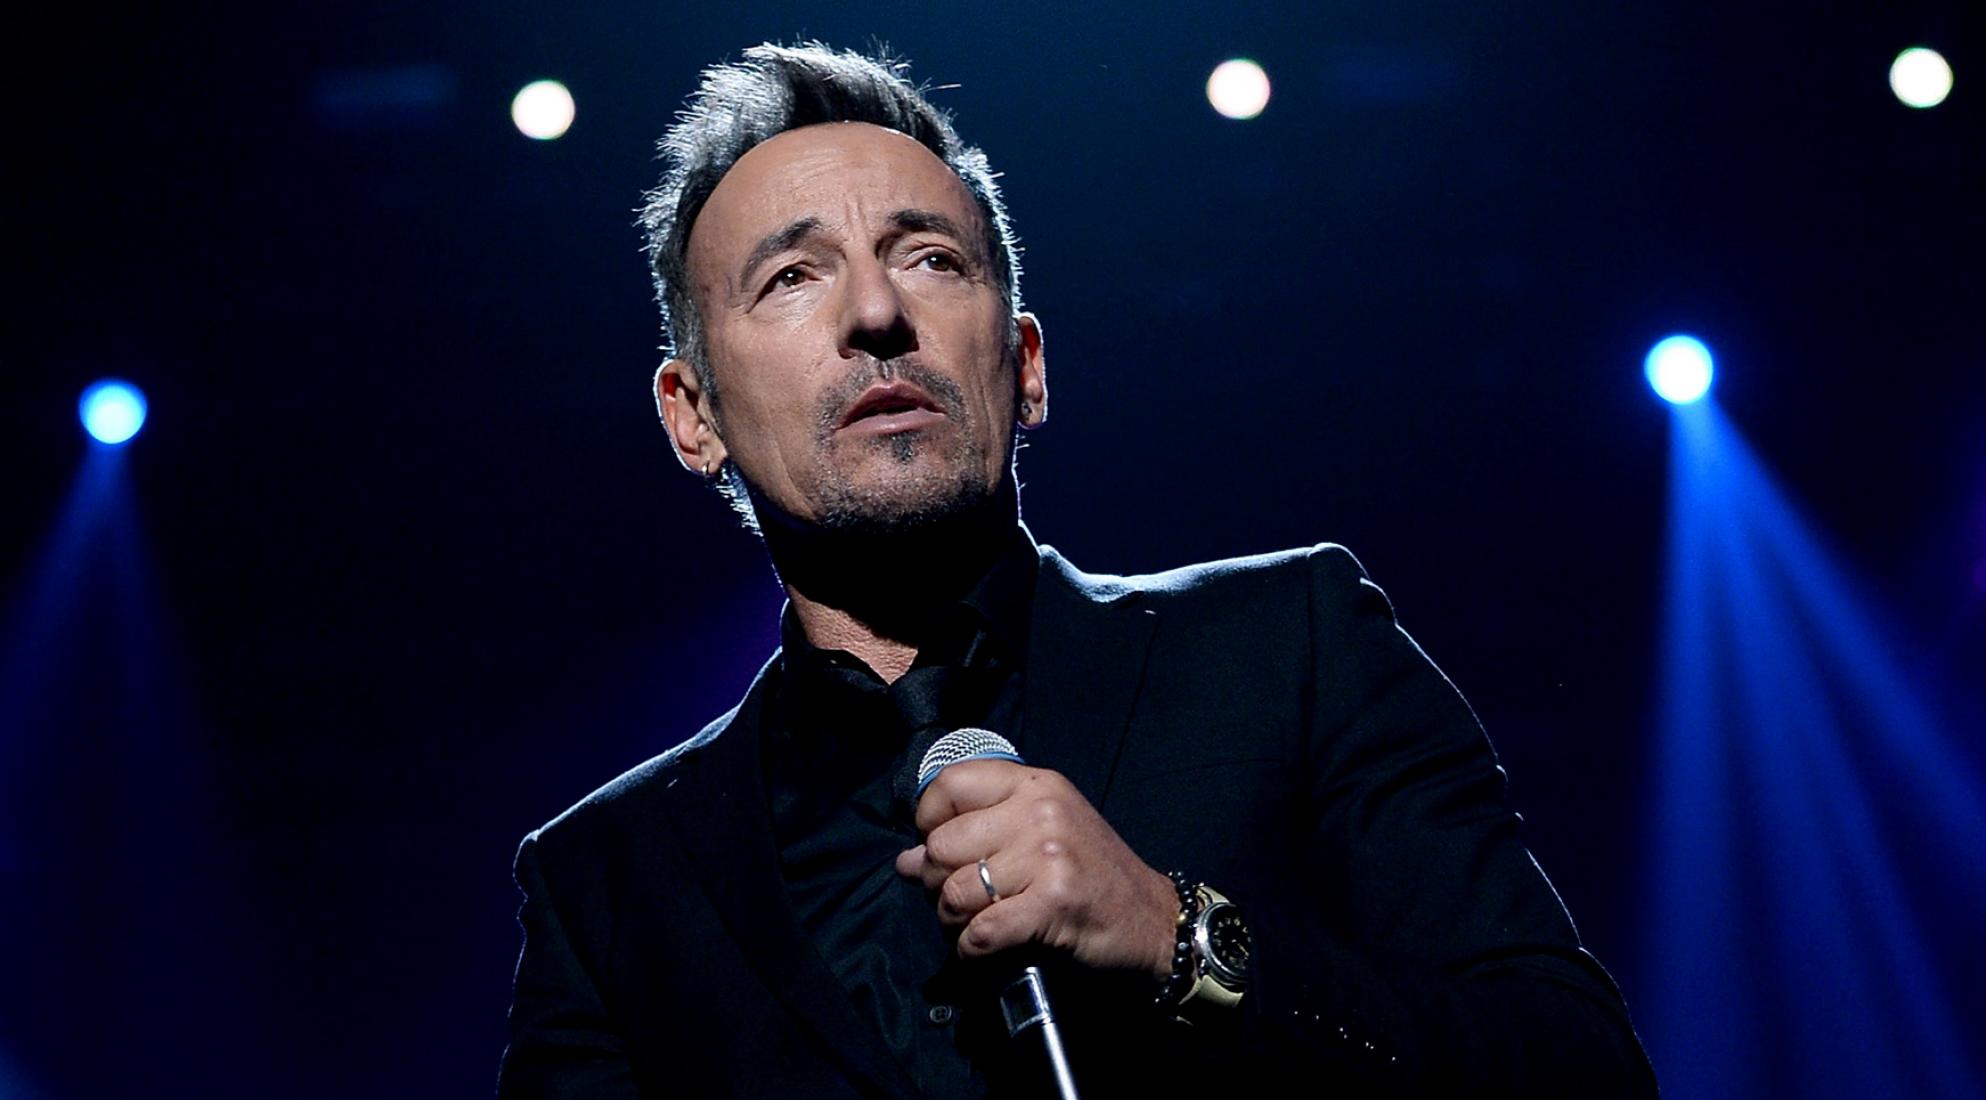 Escucha el tema inédito de Bruce Springsteen, ‘I'll Stand by You’ - Cúsica Plus